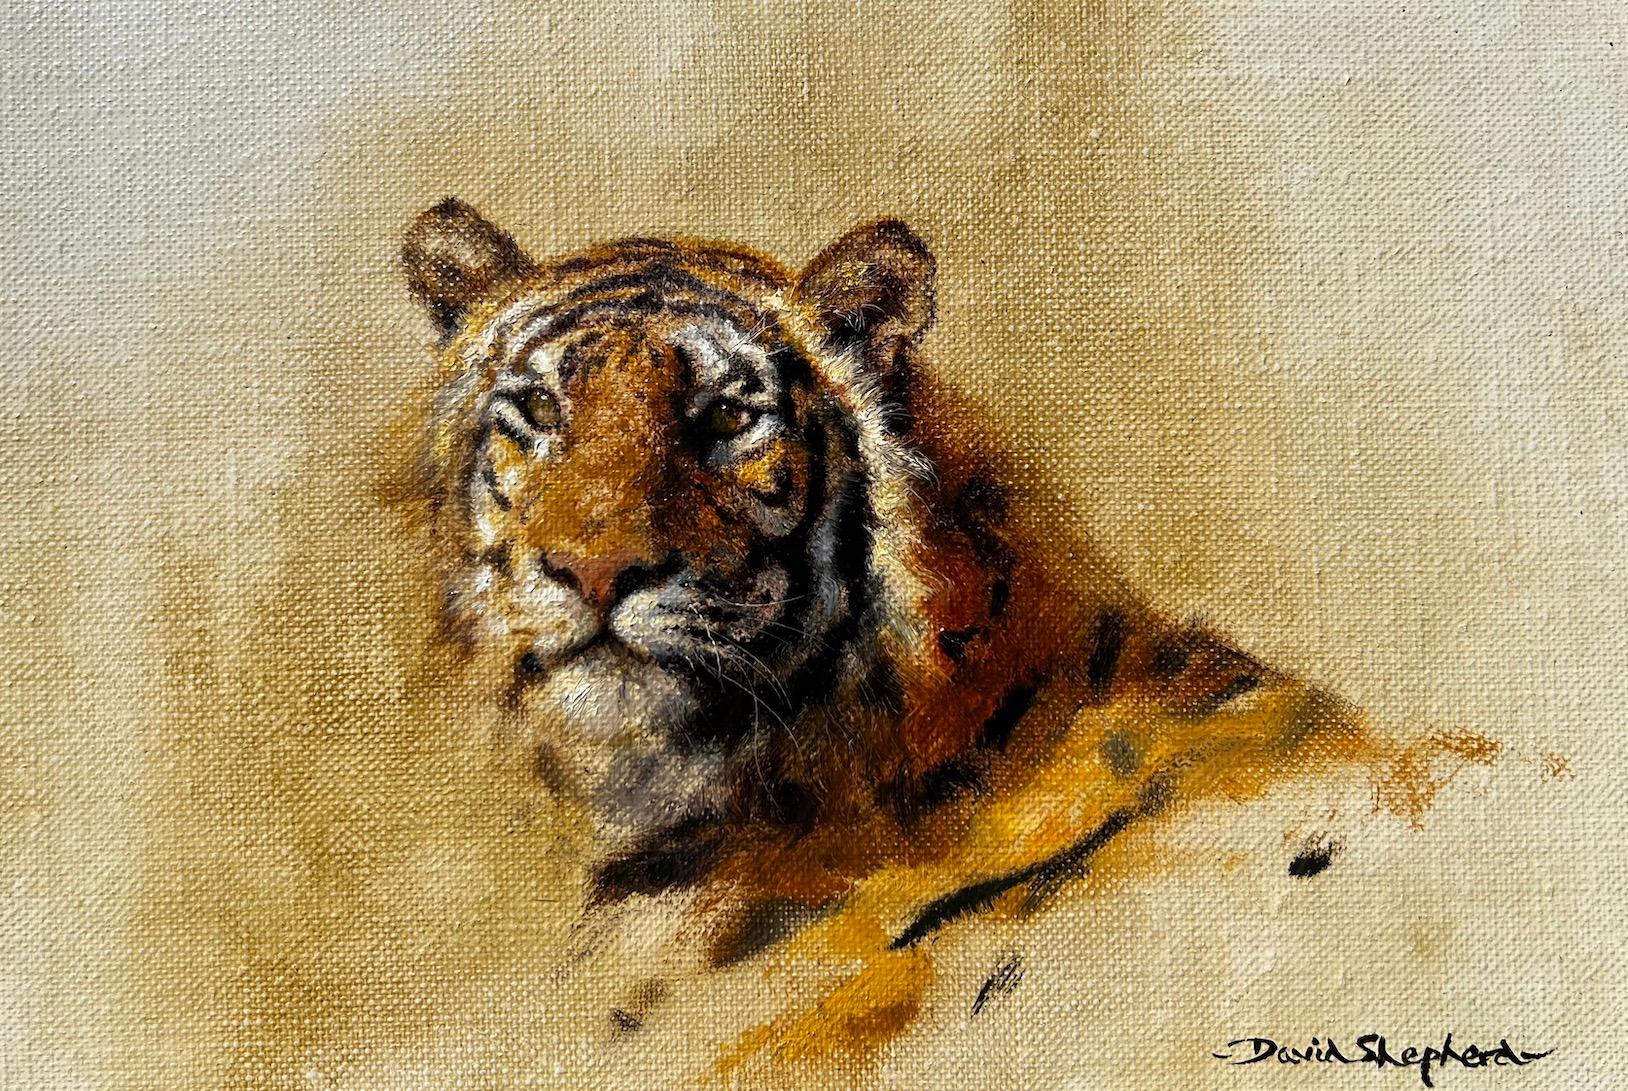 Animal Painting David Shepherd - Les yeux du tigre